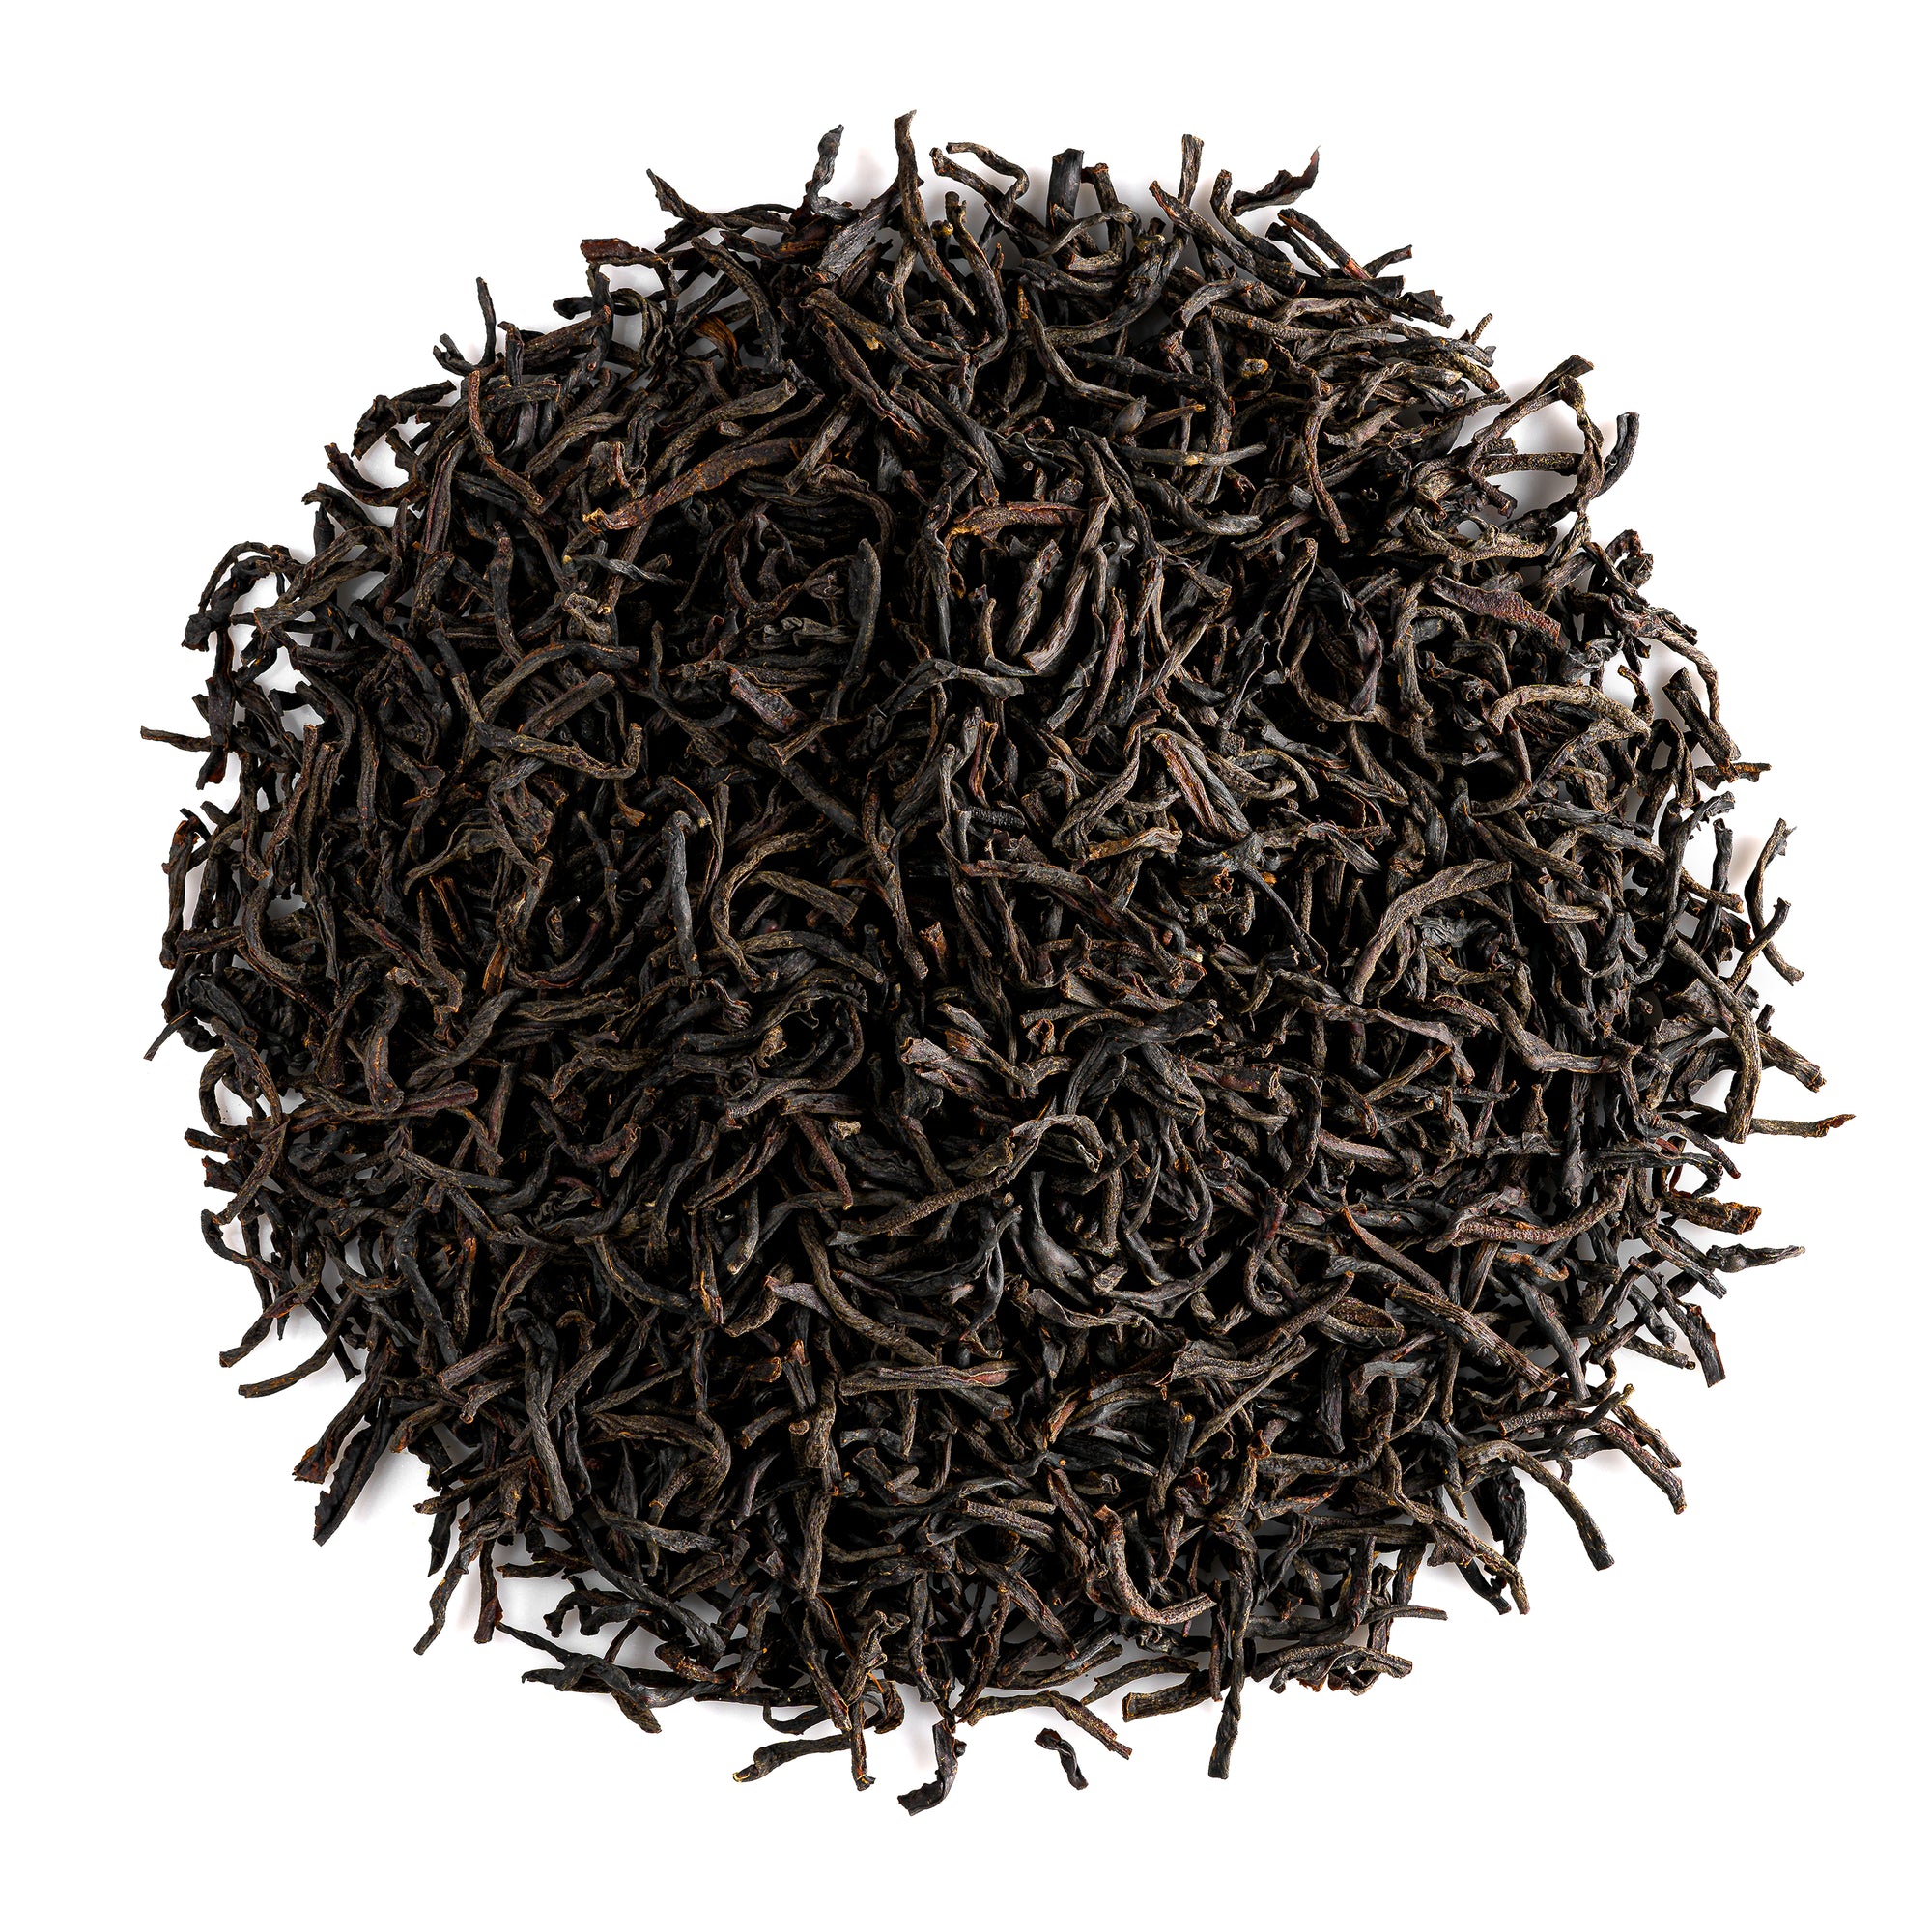 Sri Lanka Black Tea Leaf - Special Grade From Nuwara Eliya